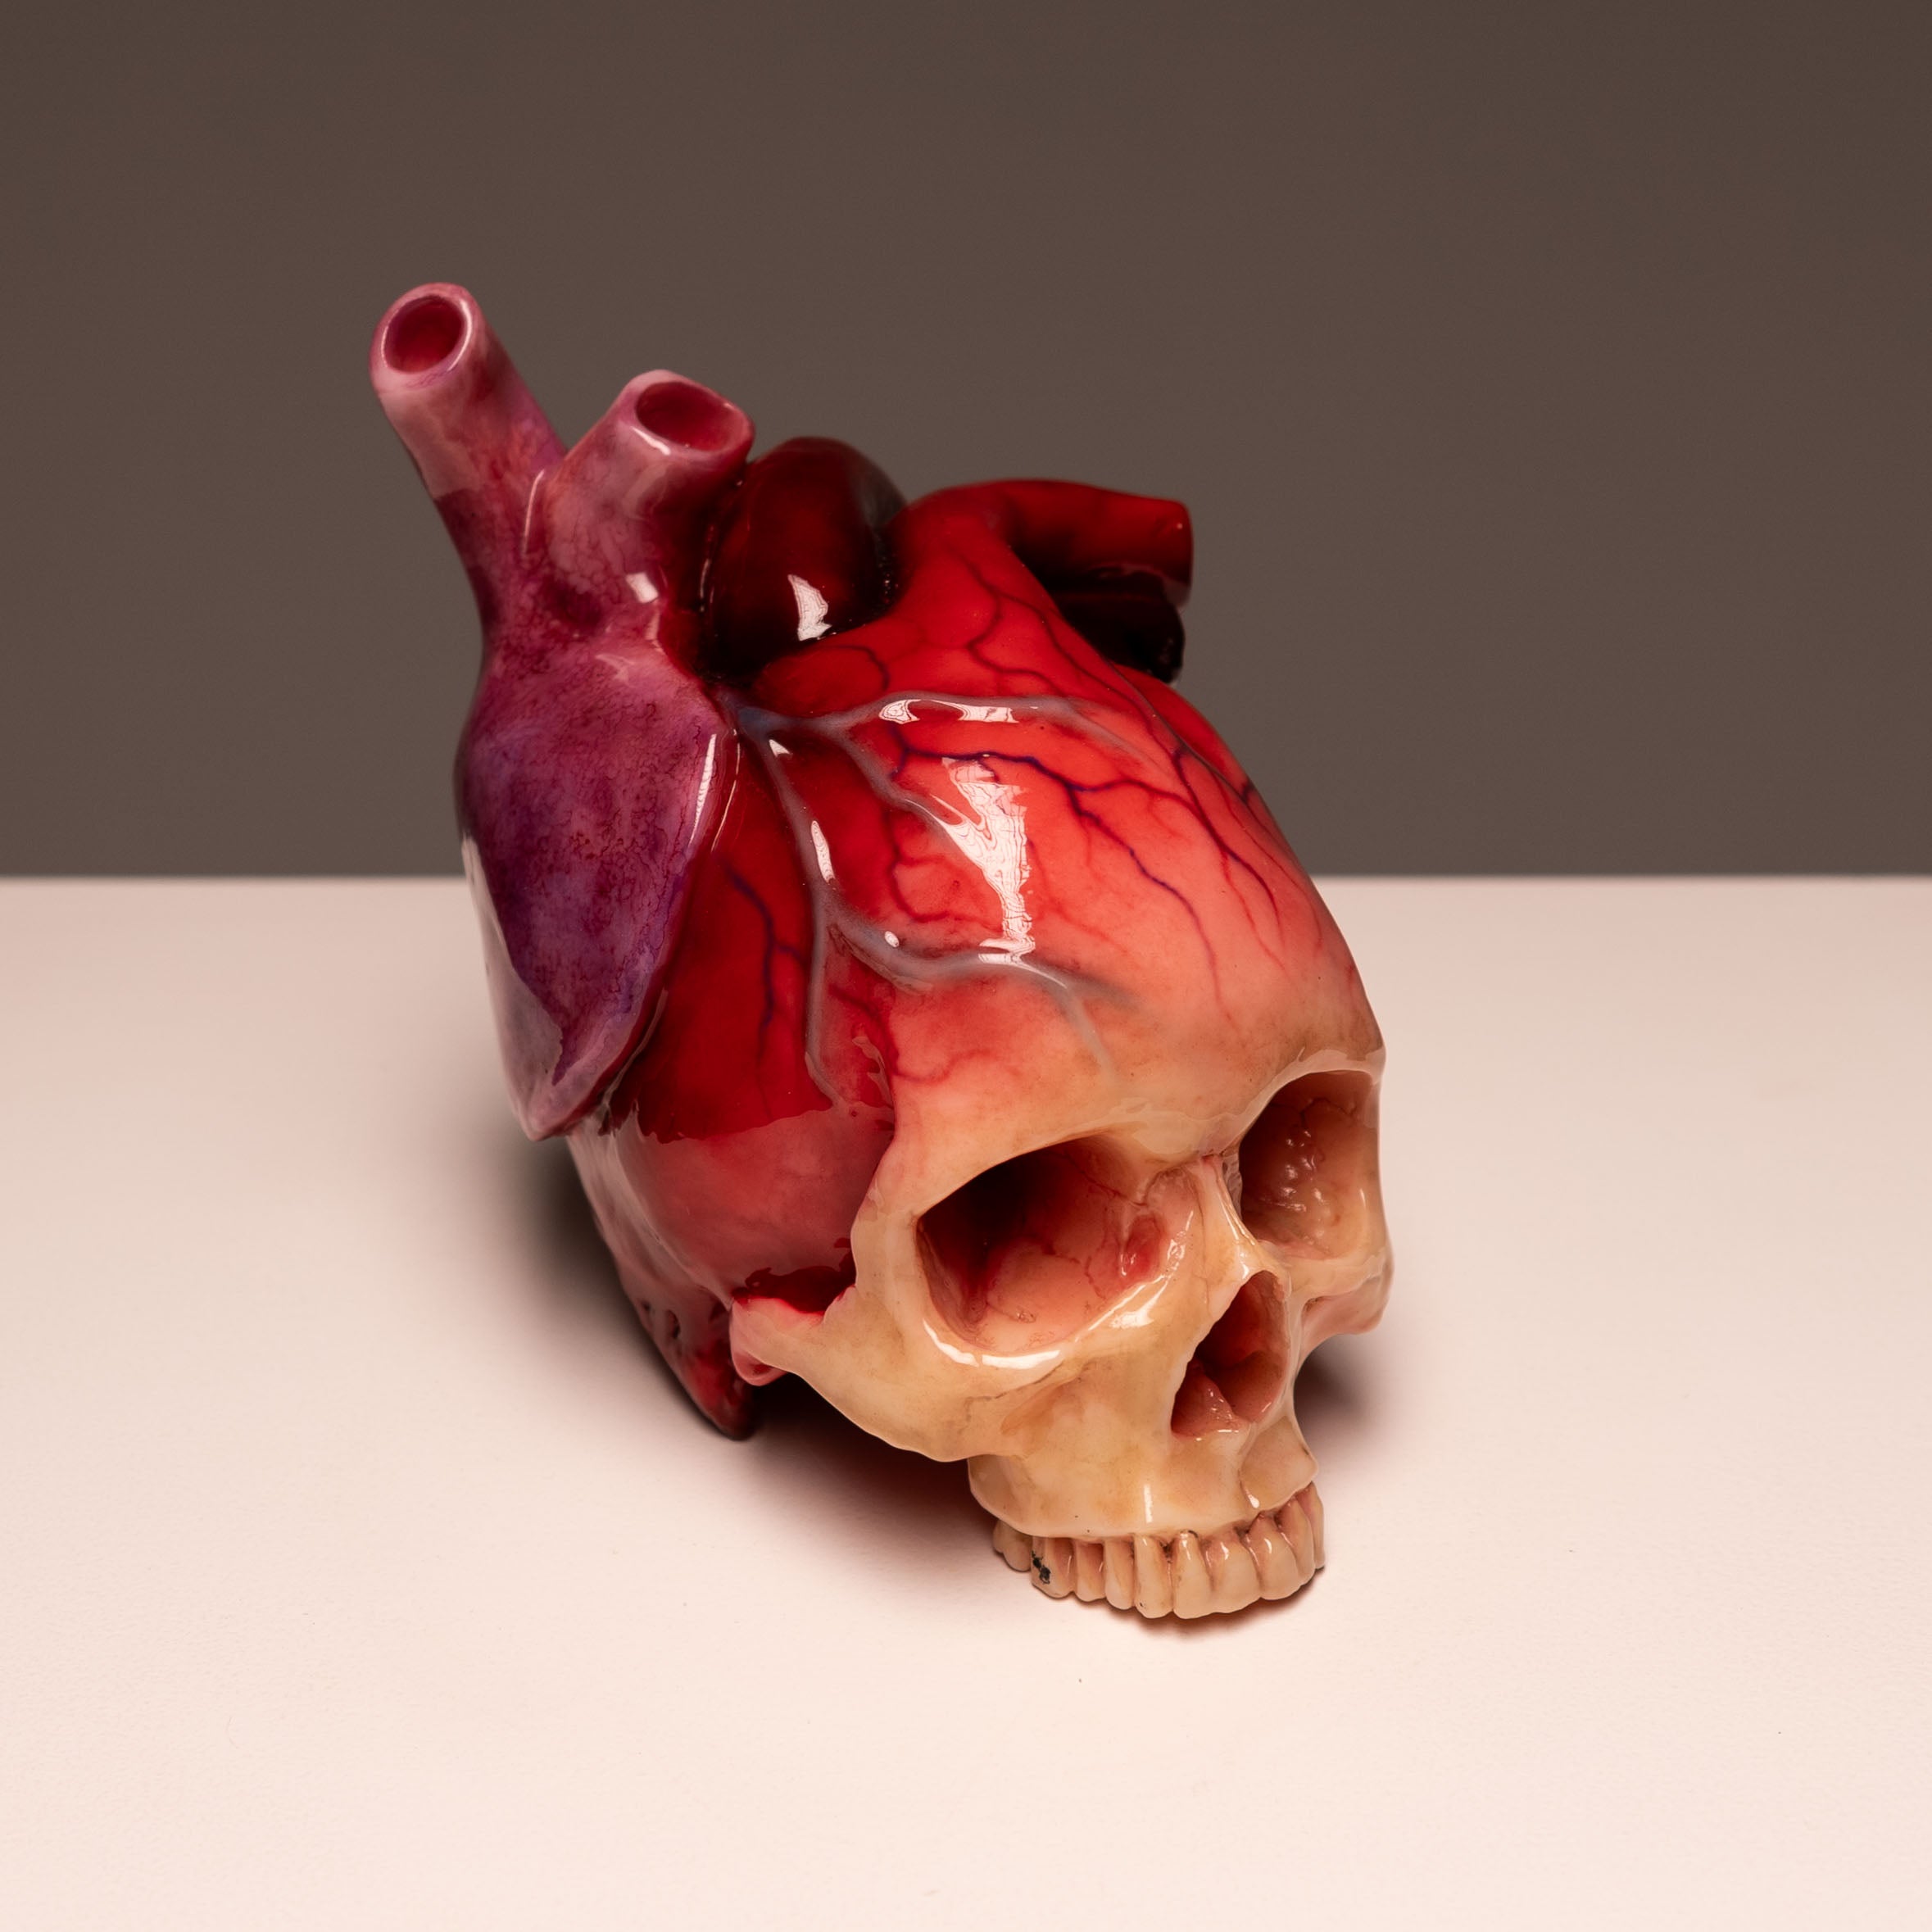 The Tell-Tale Heart Skull